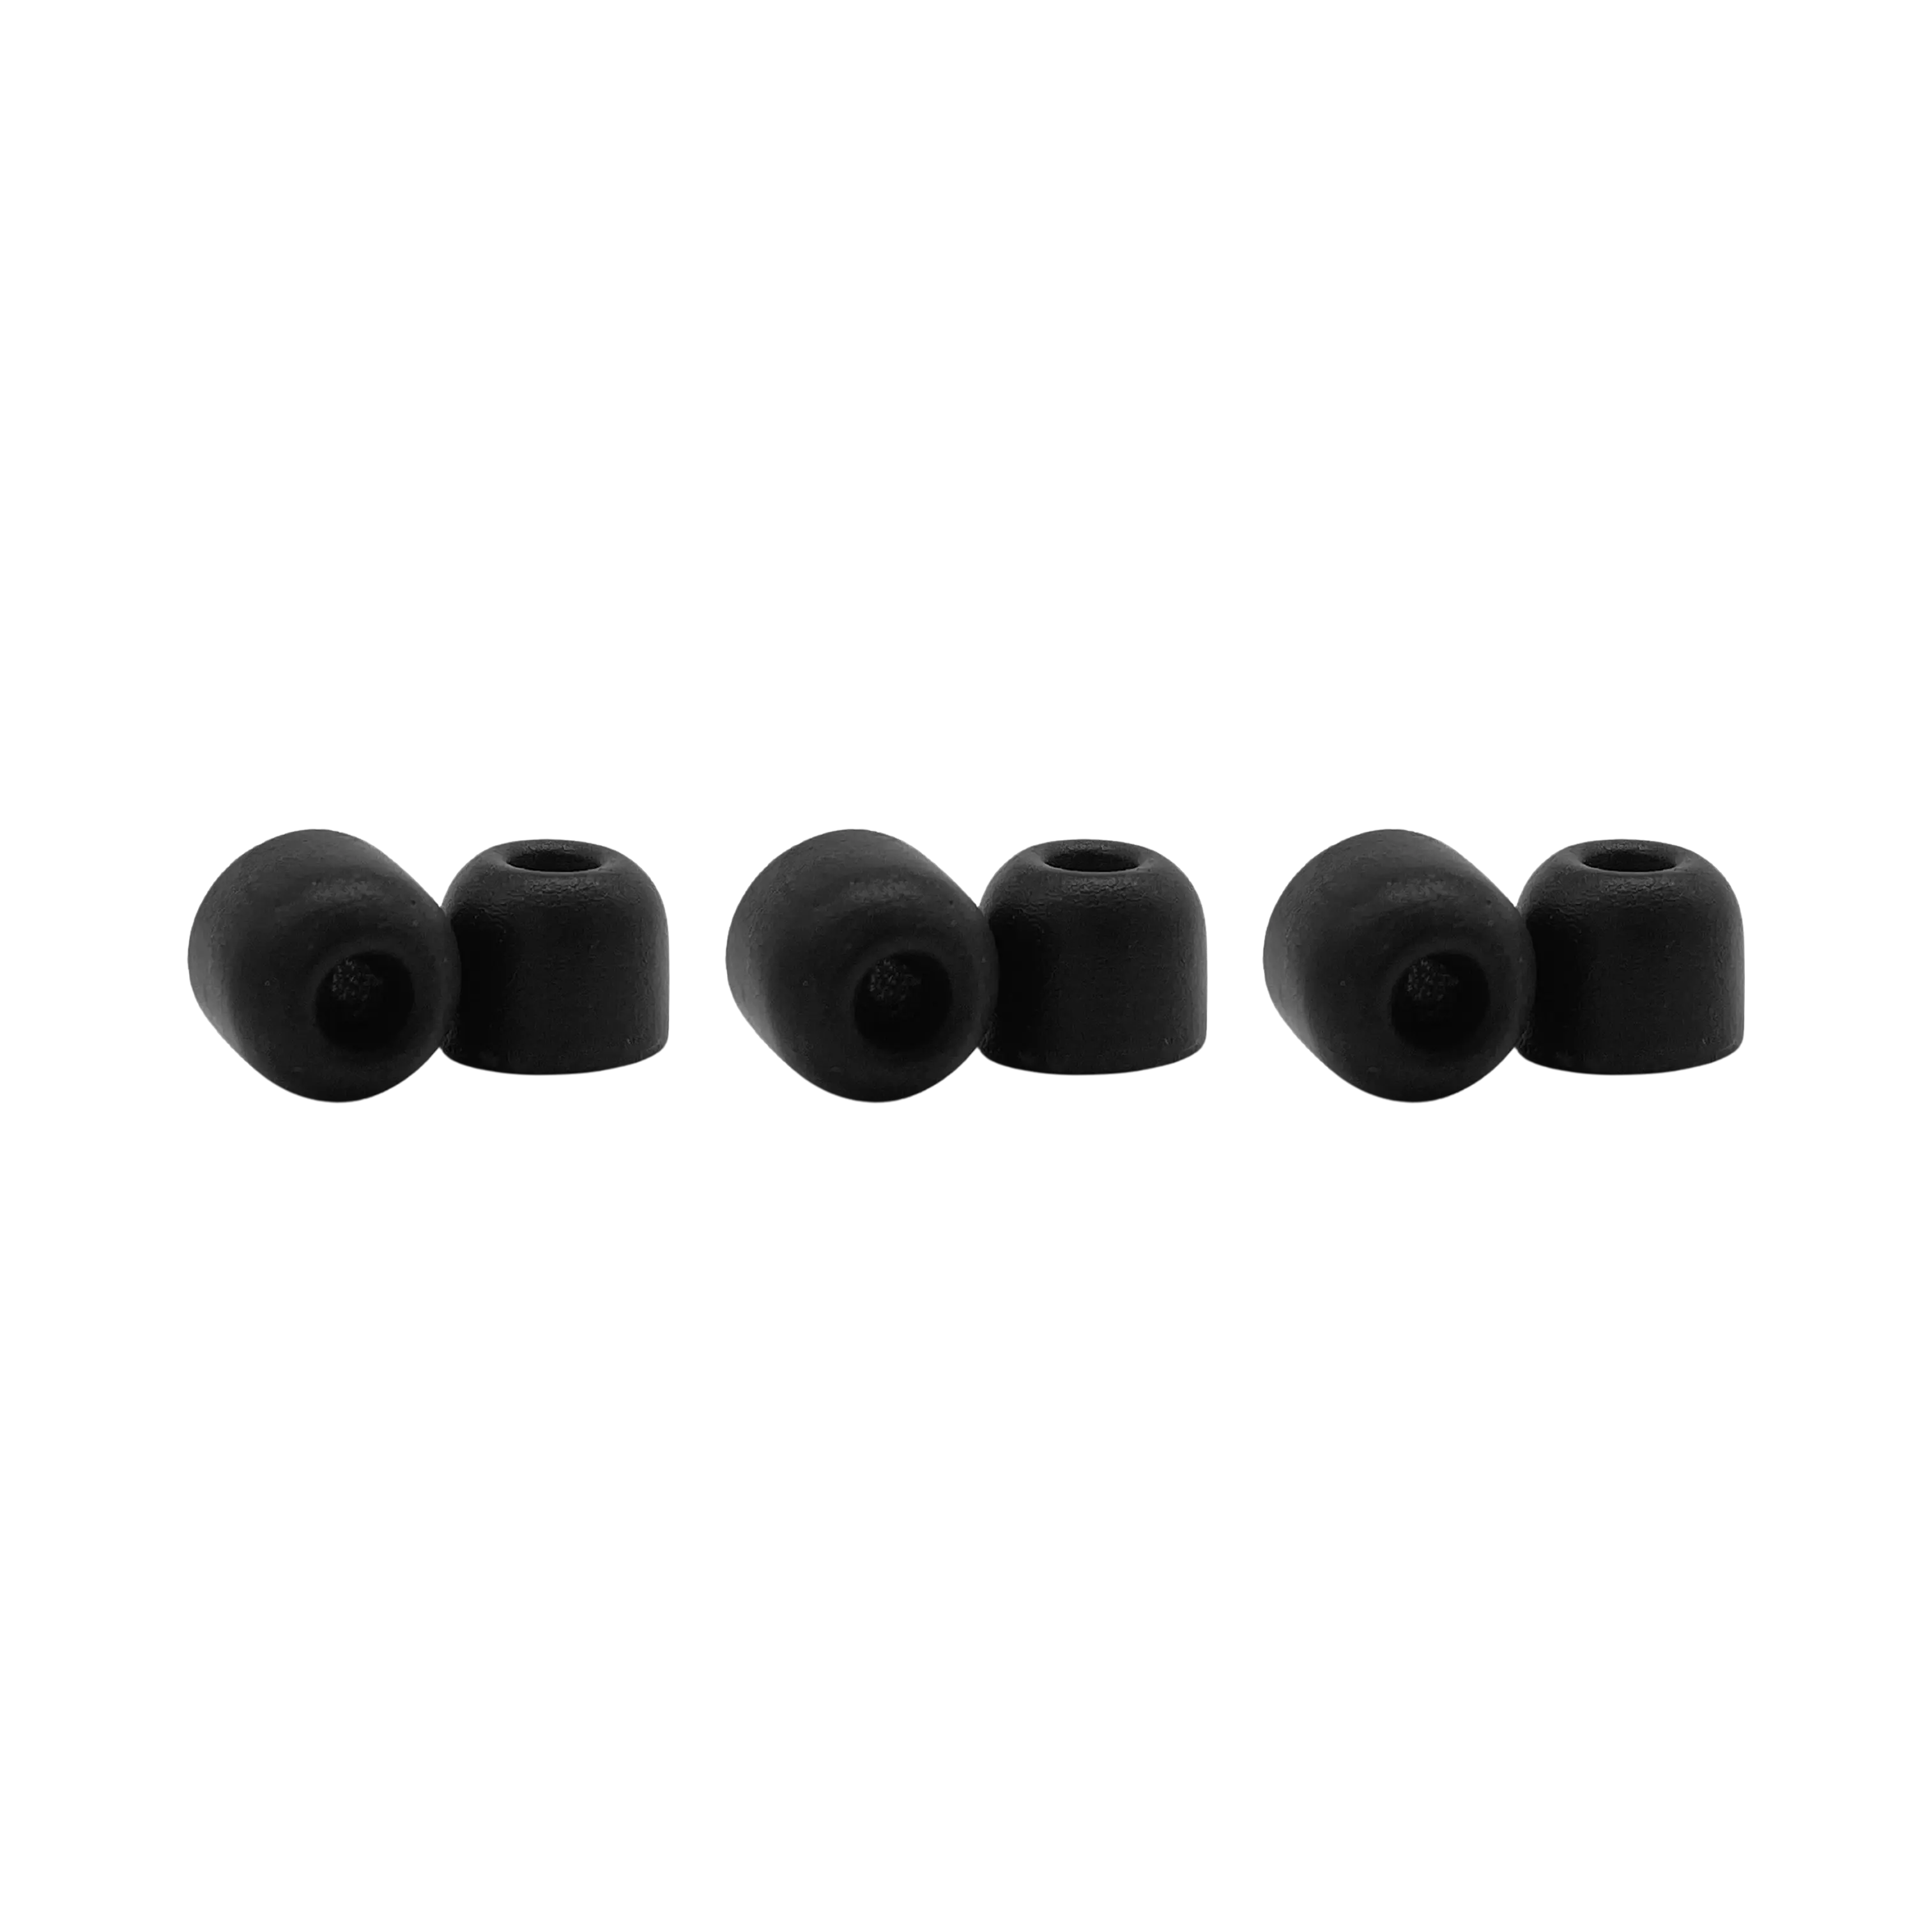 EACYF1-6L Comply (100 Series) Black Foam Sleeves - Large, 3 Pairs